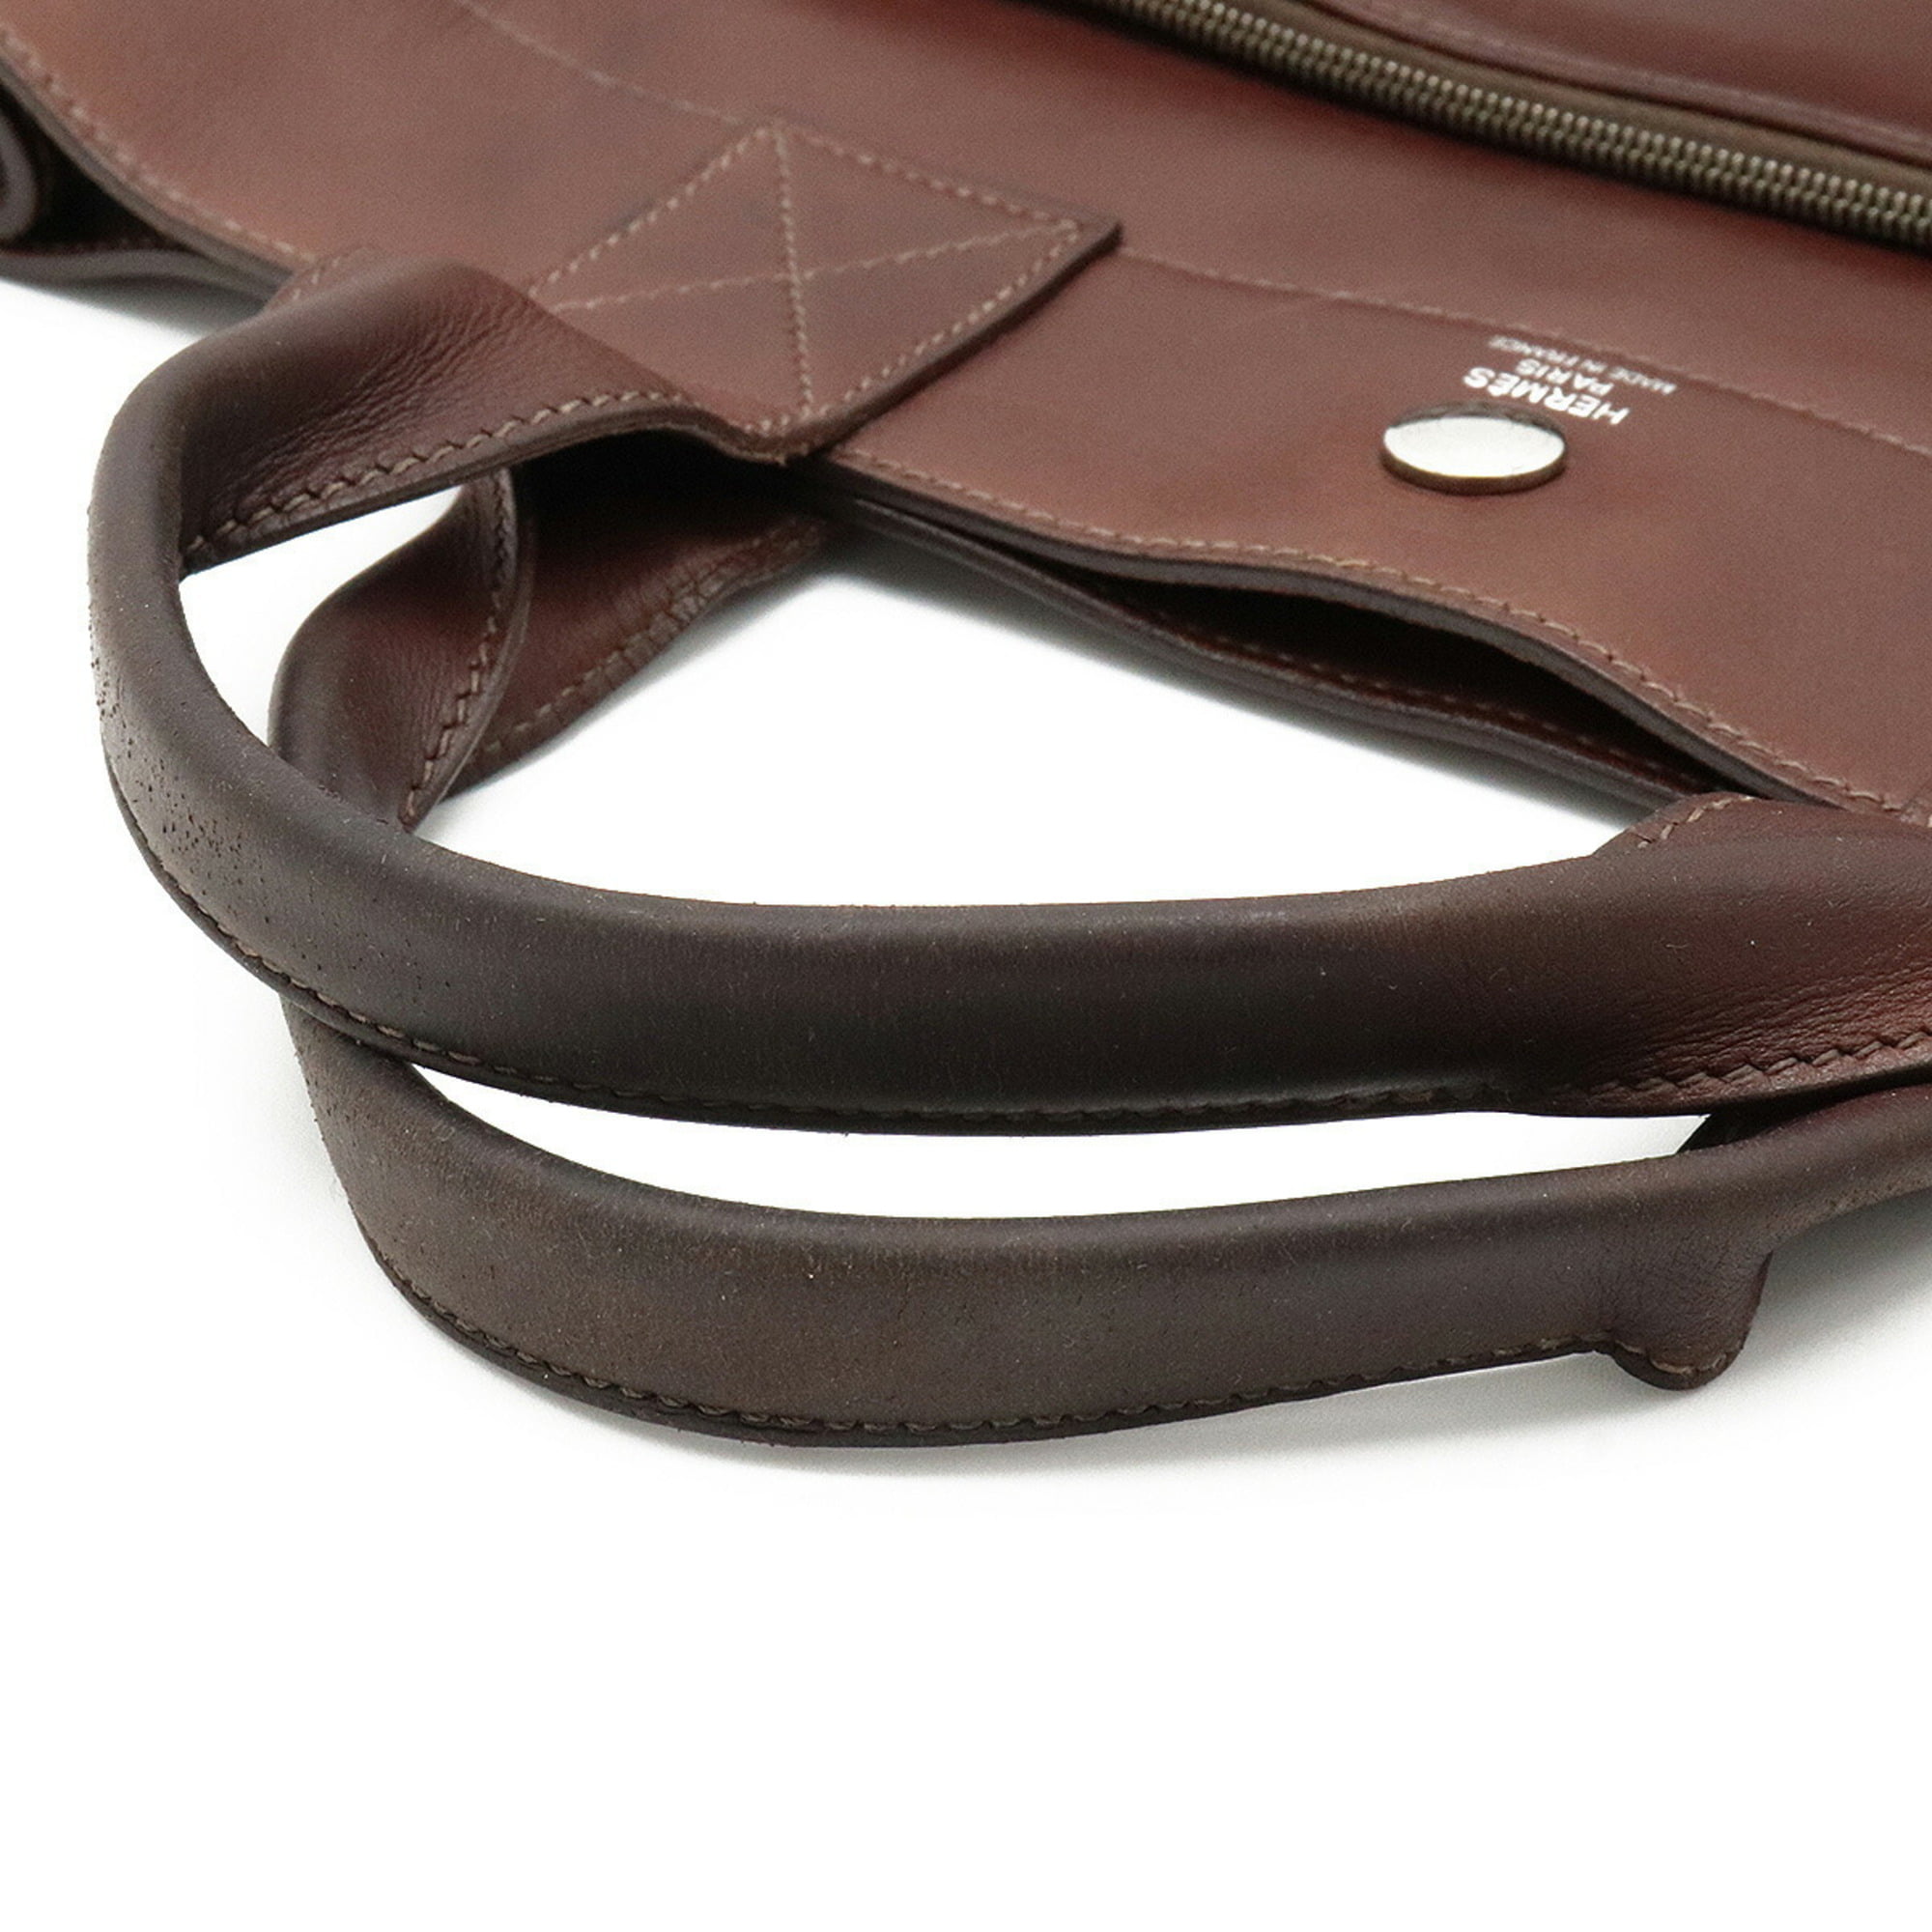 Hermès Birkin Handbag 394506